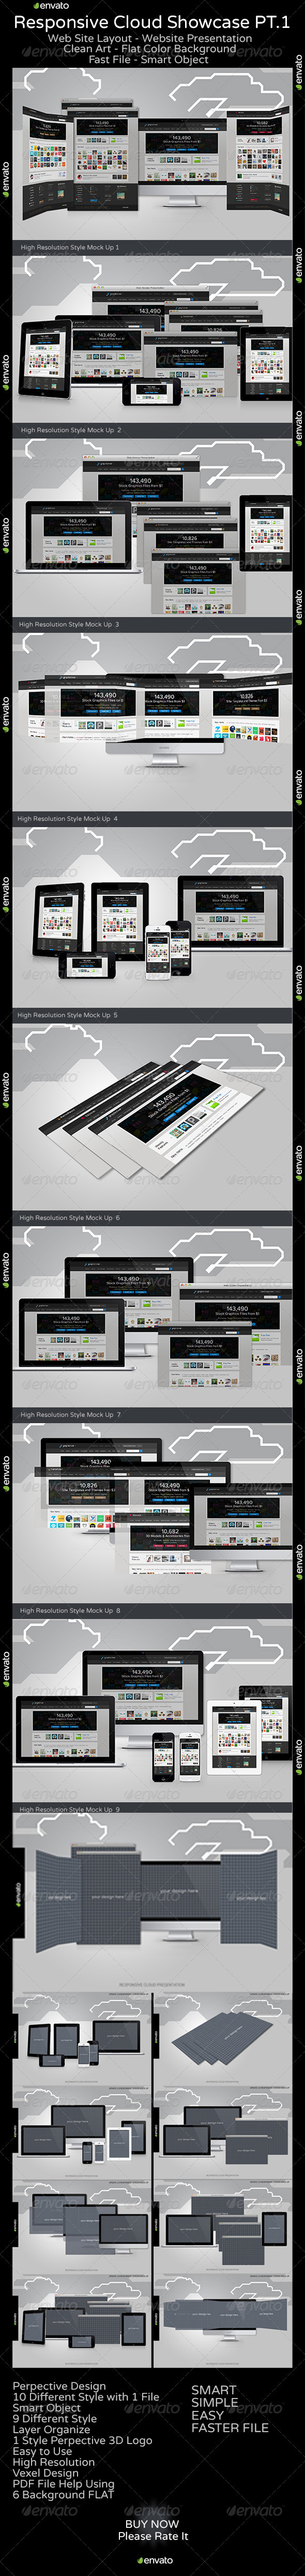 Web design App Screen application Responsive PERPECTIVE MOCK UP